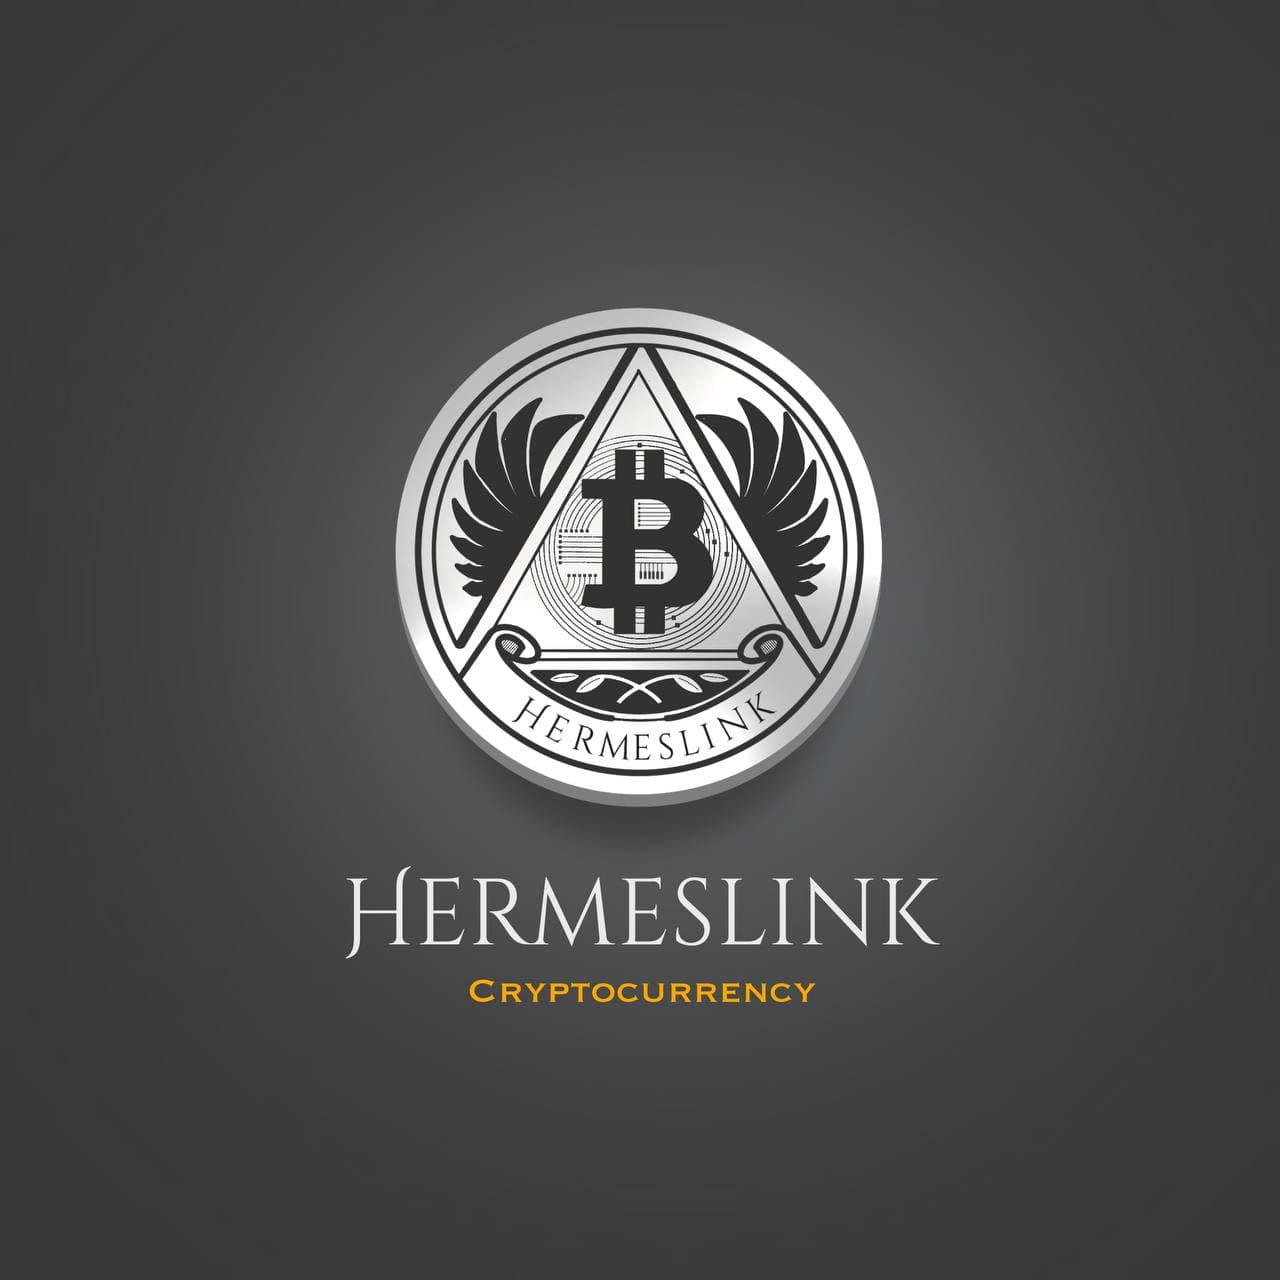 HermesLink